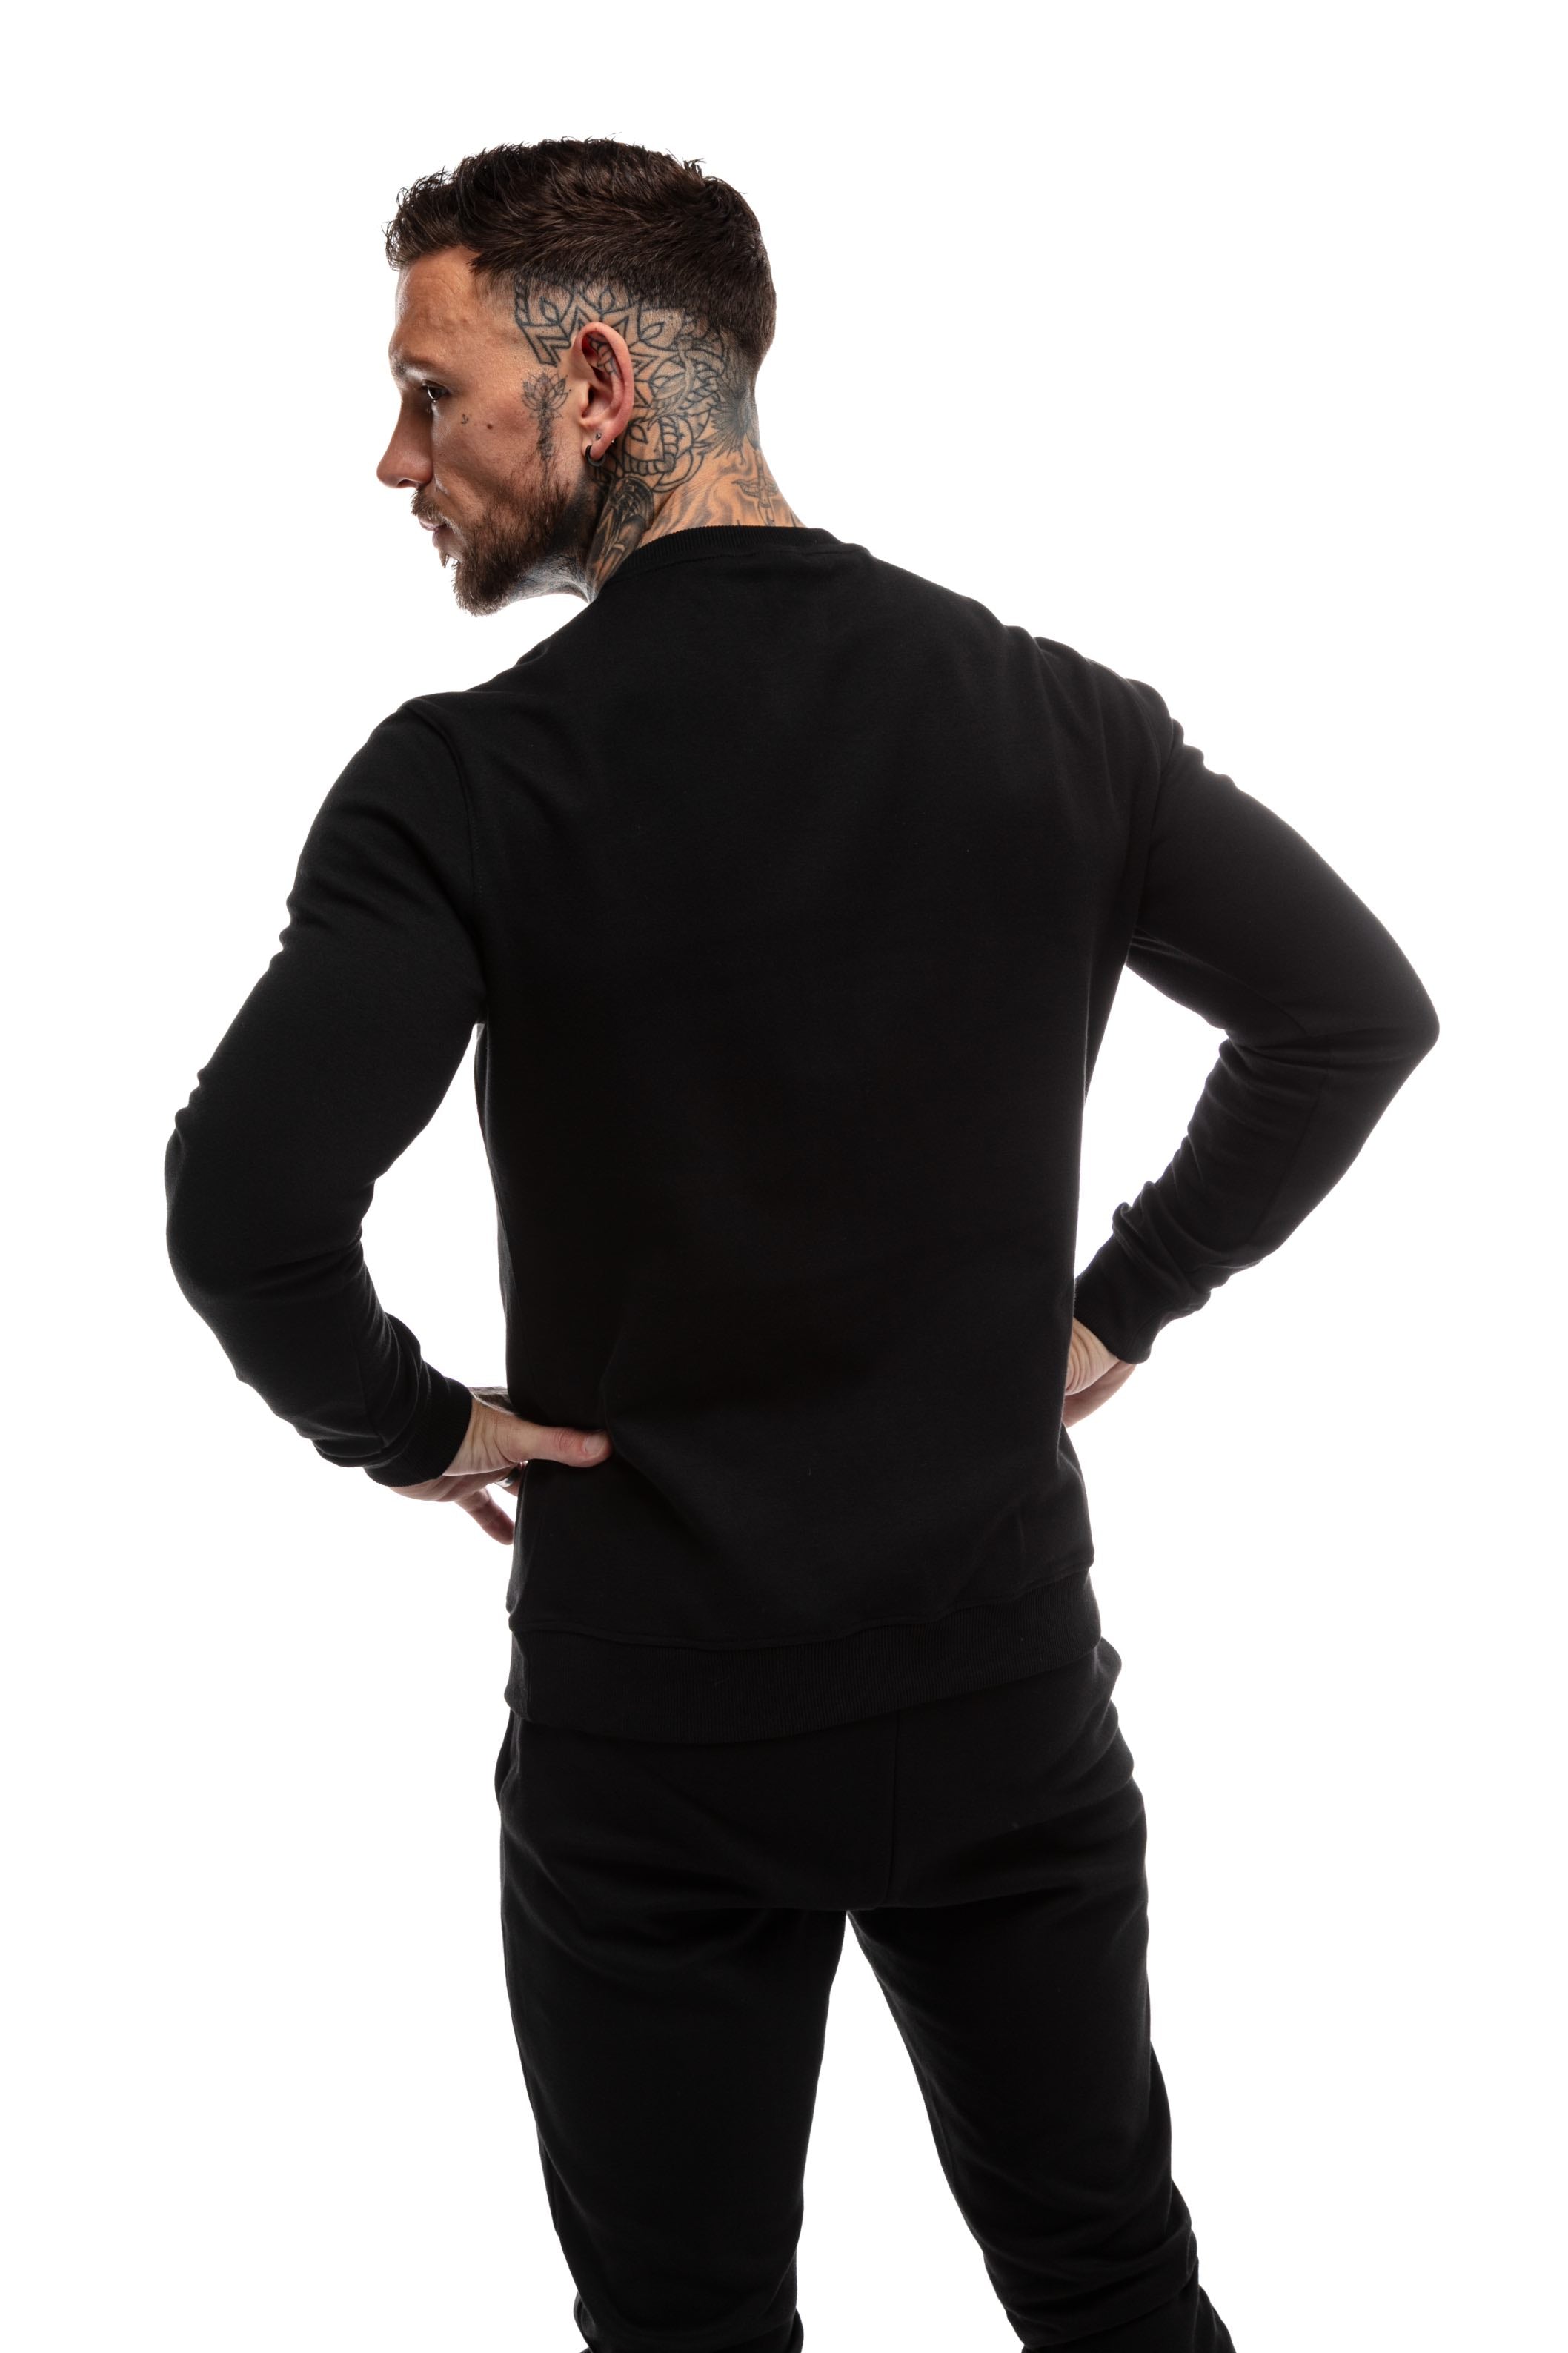 GymFreak Mens Power Sweatshirt - Black